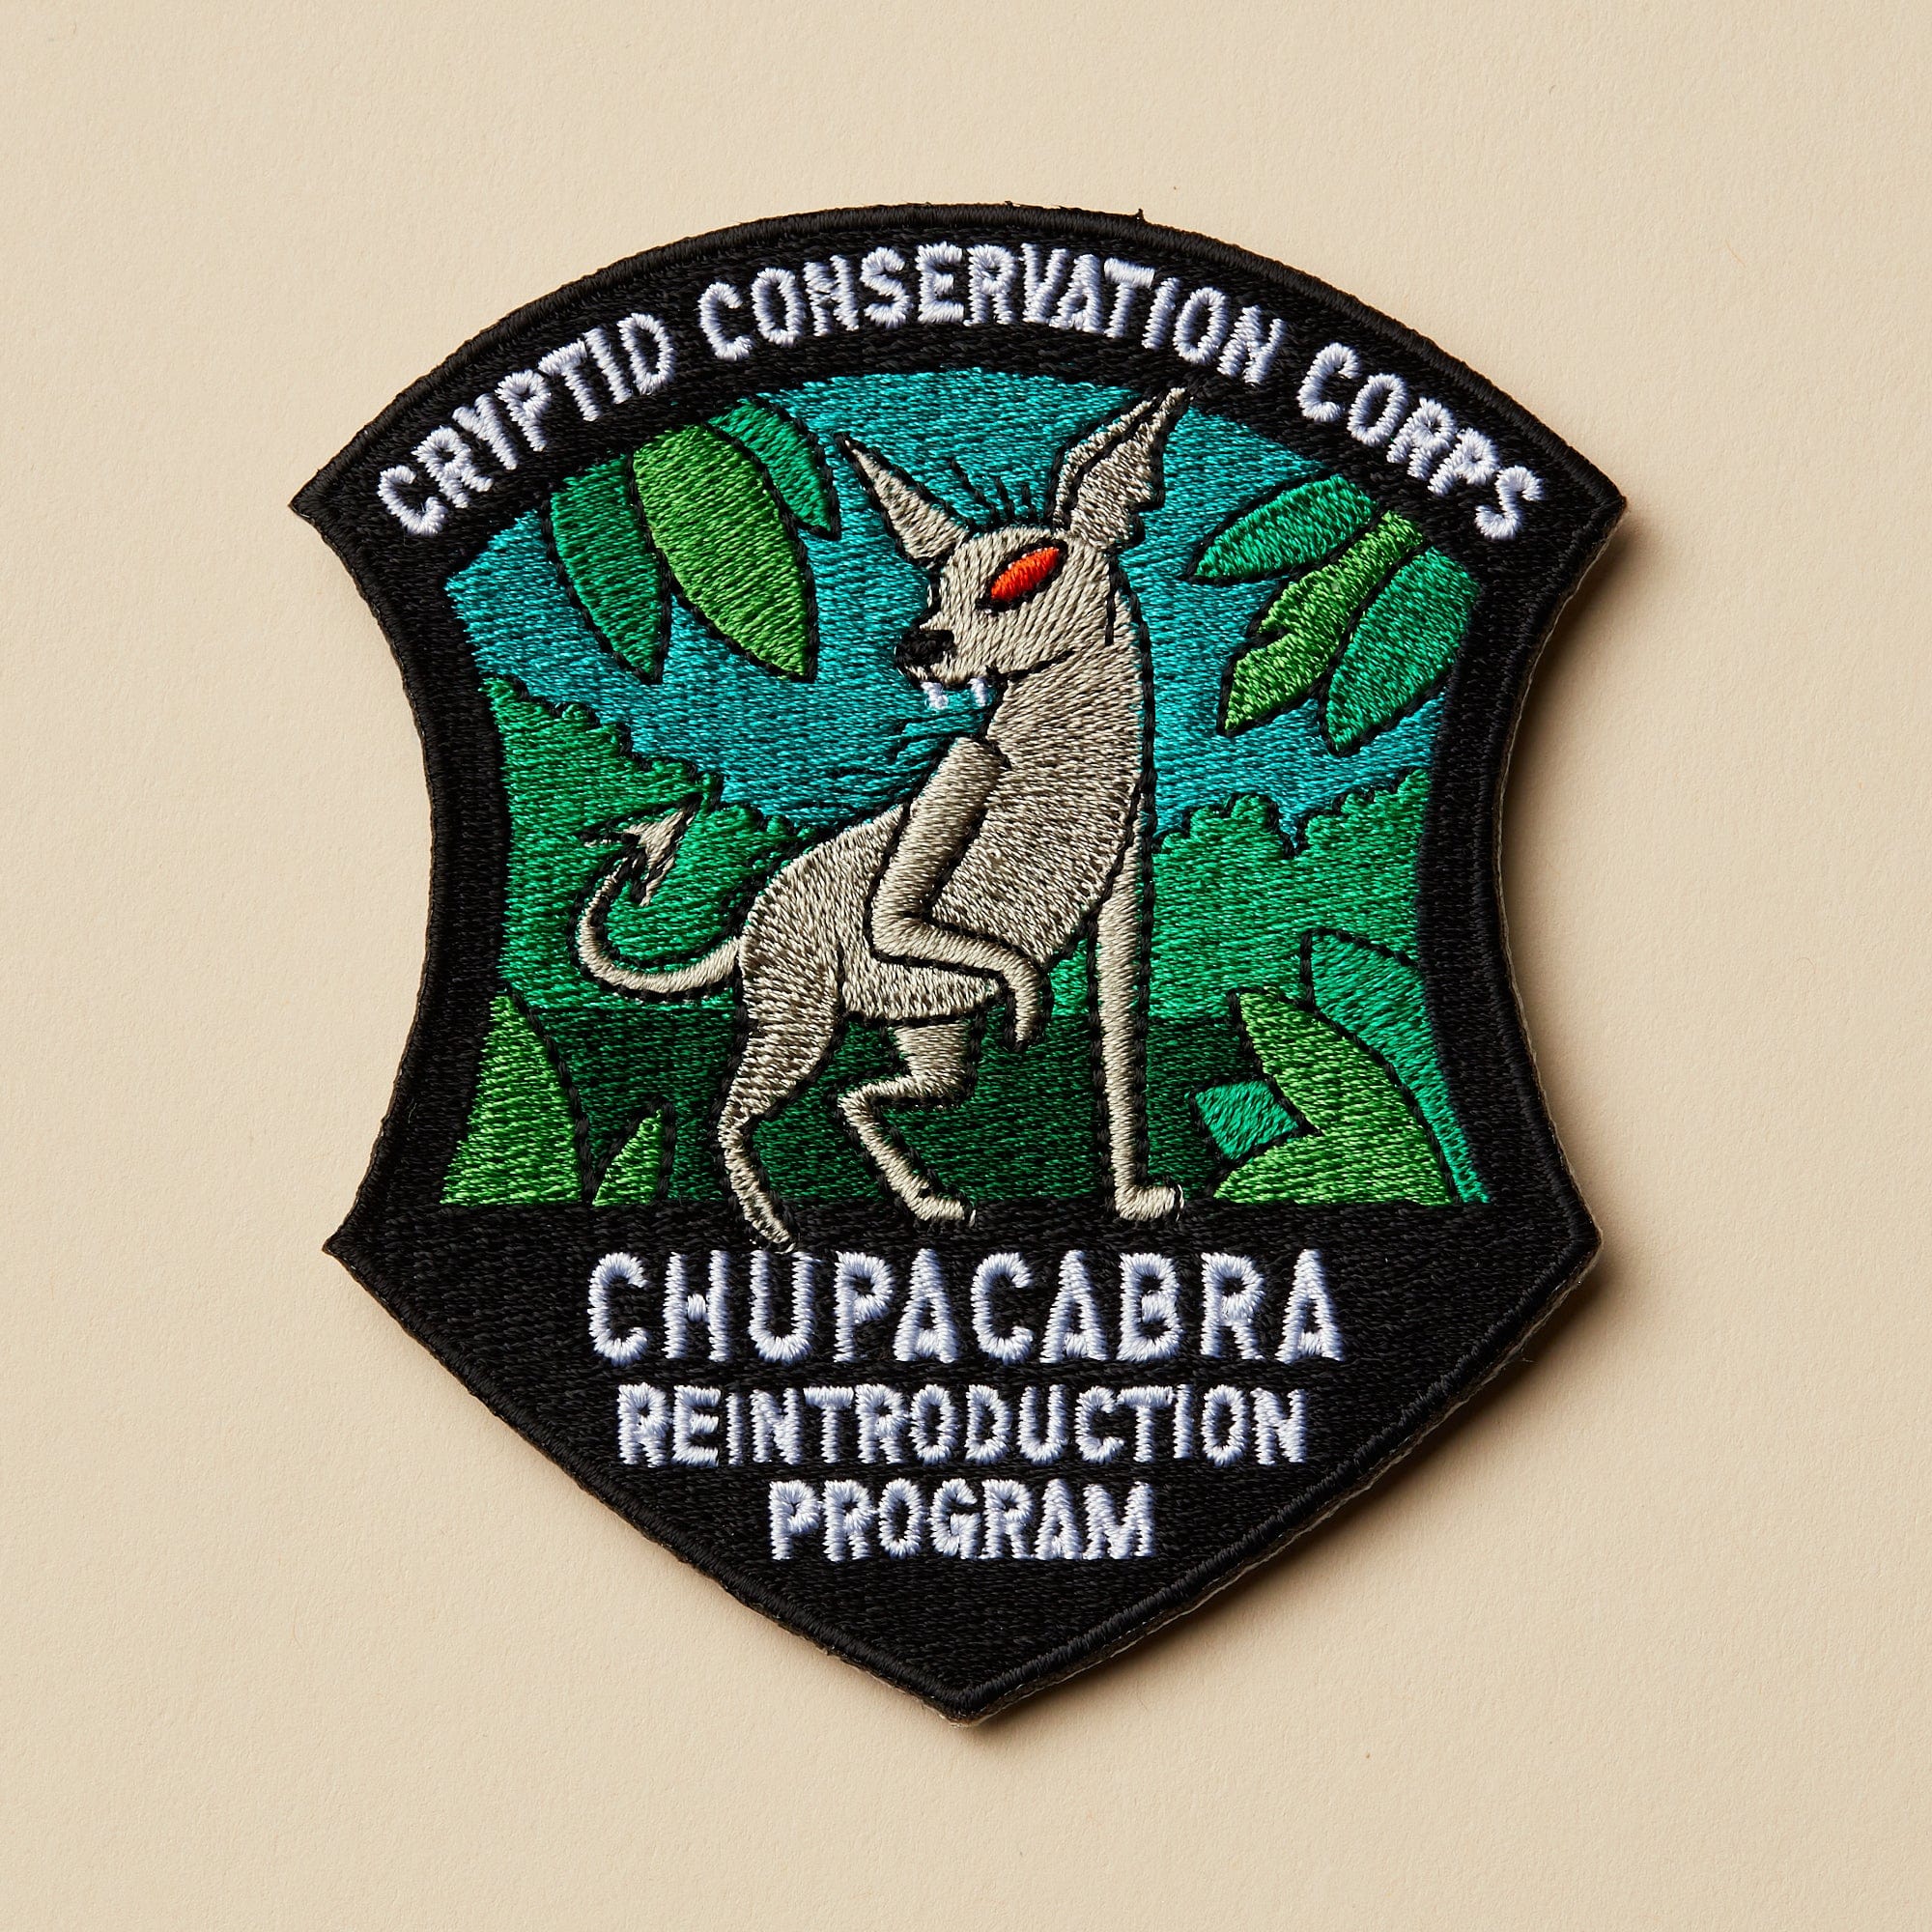 Chupacabra Reintroduction Program Patch